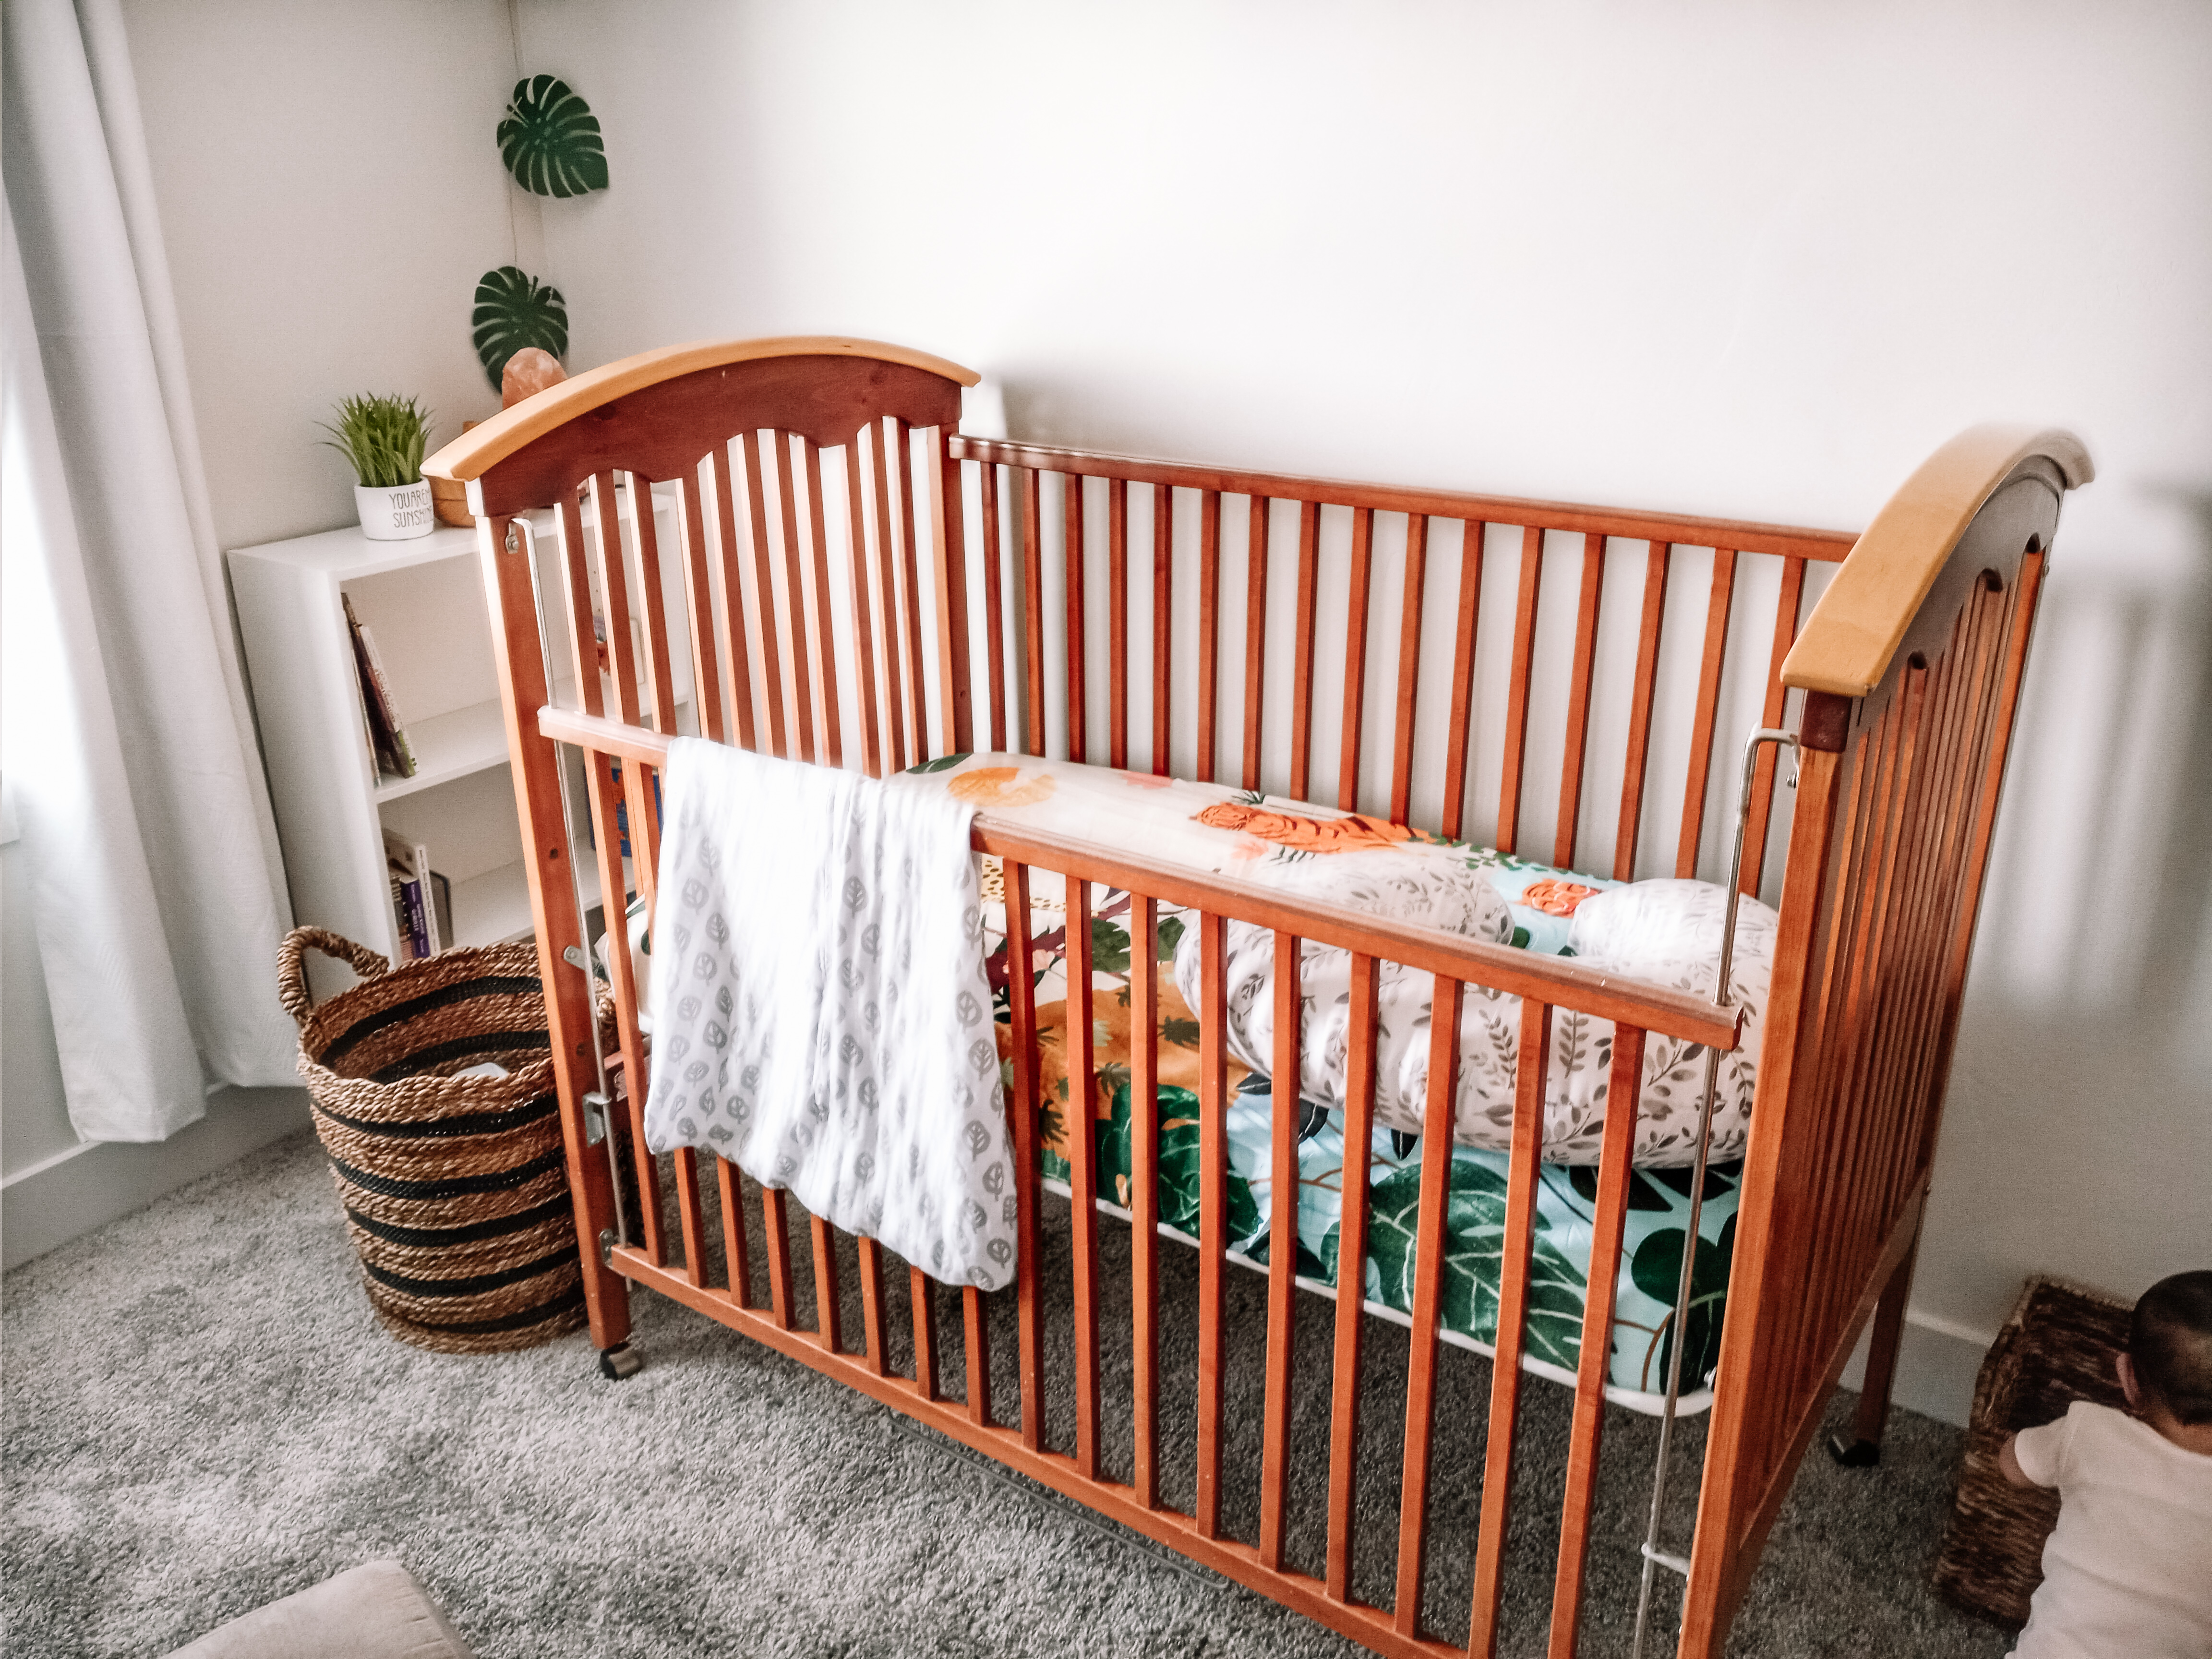 Jungle nursery decor for baby